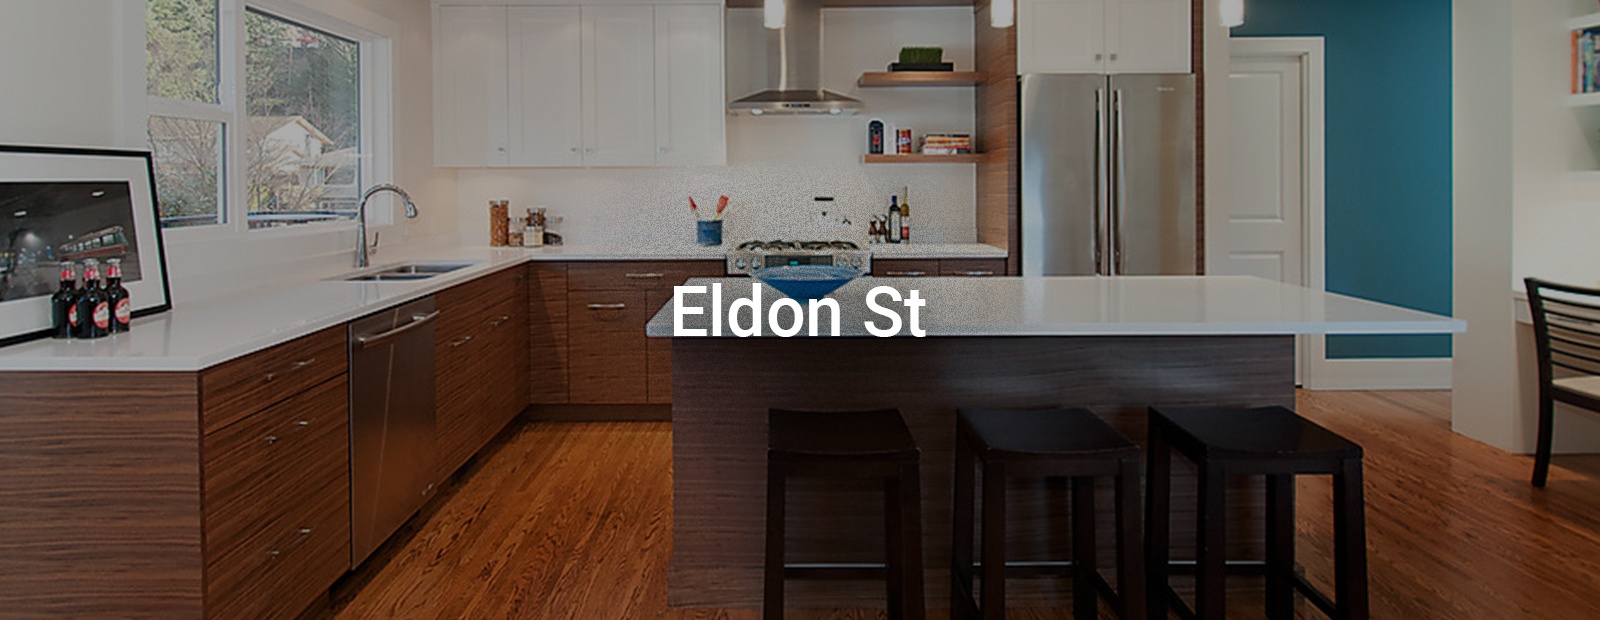 Eldon St - Interior Design Company Vancouver